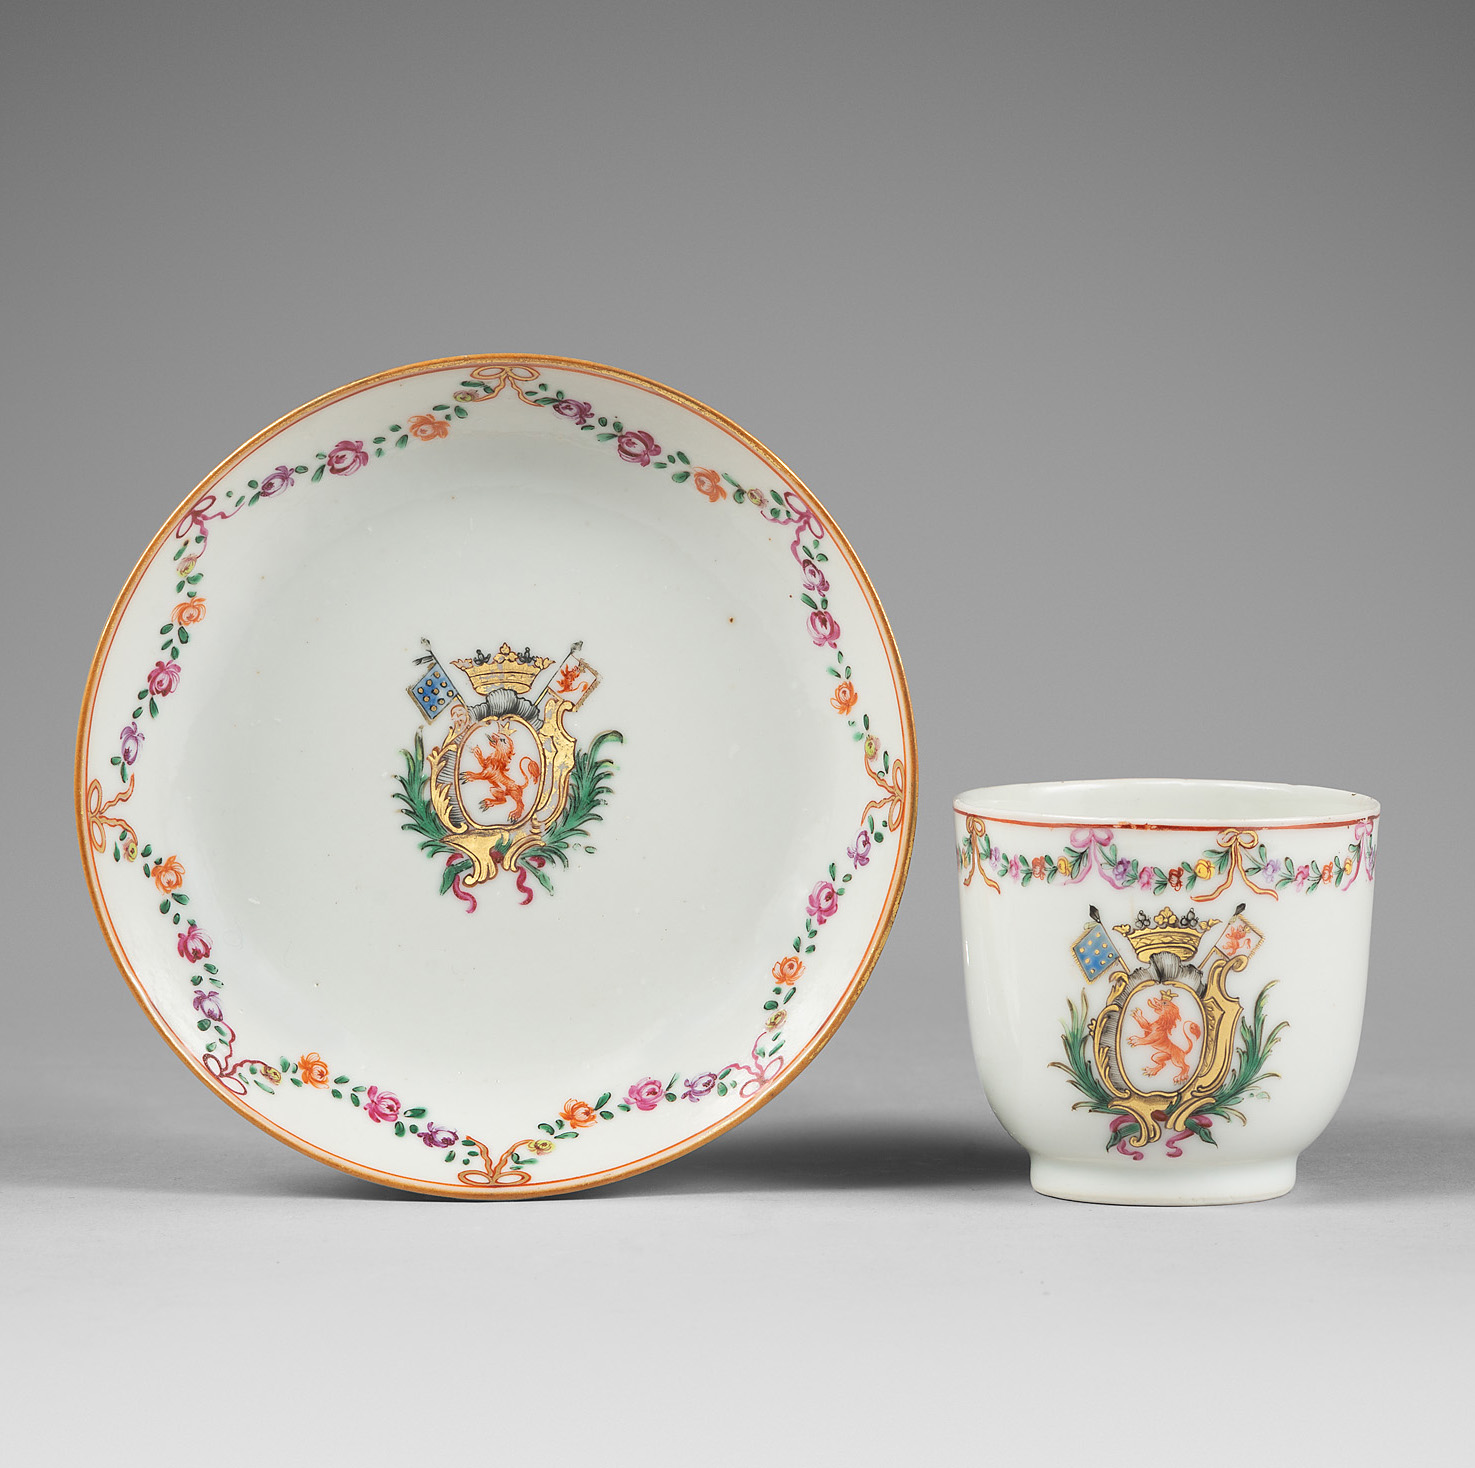 Porcelaine Qianlong (1736-1795), ca. 1780, Chine